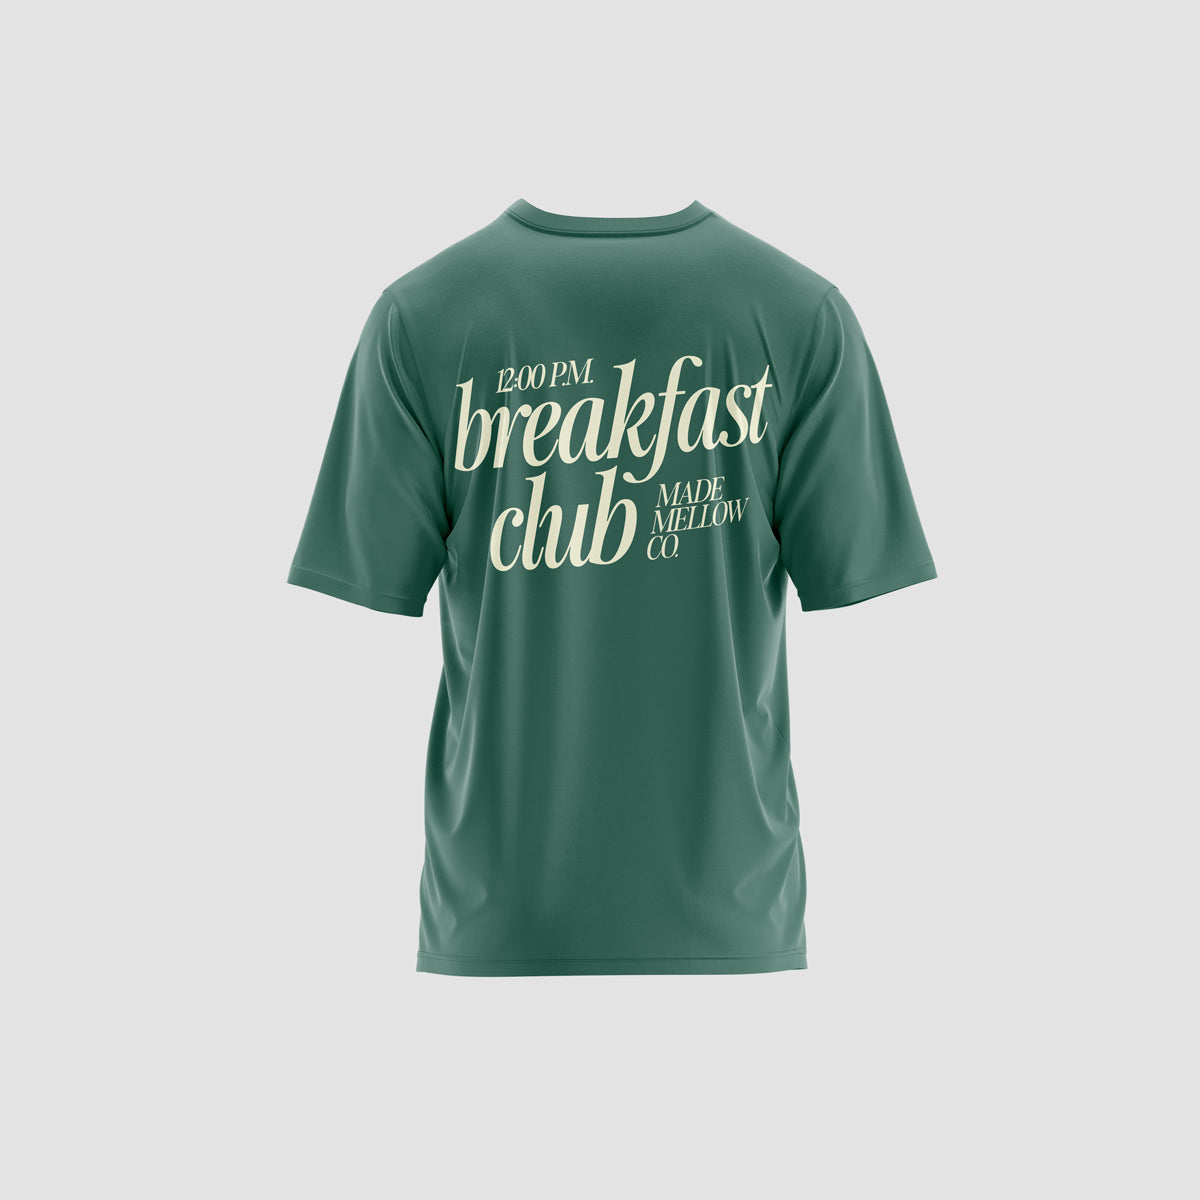 Breakfast club t-shirt - green/yellow